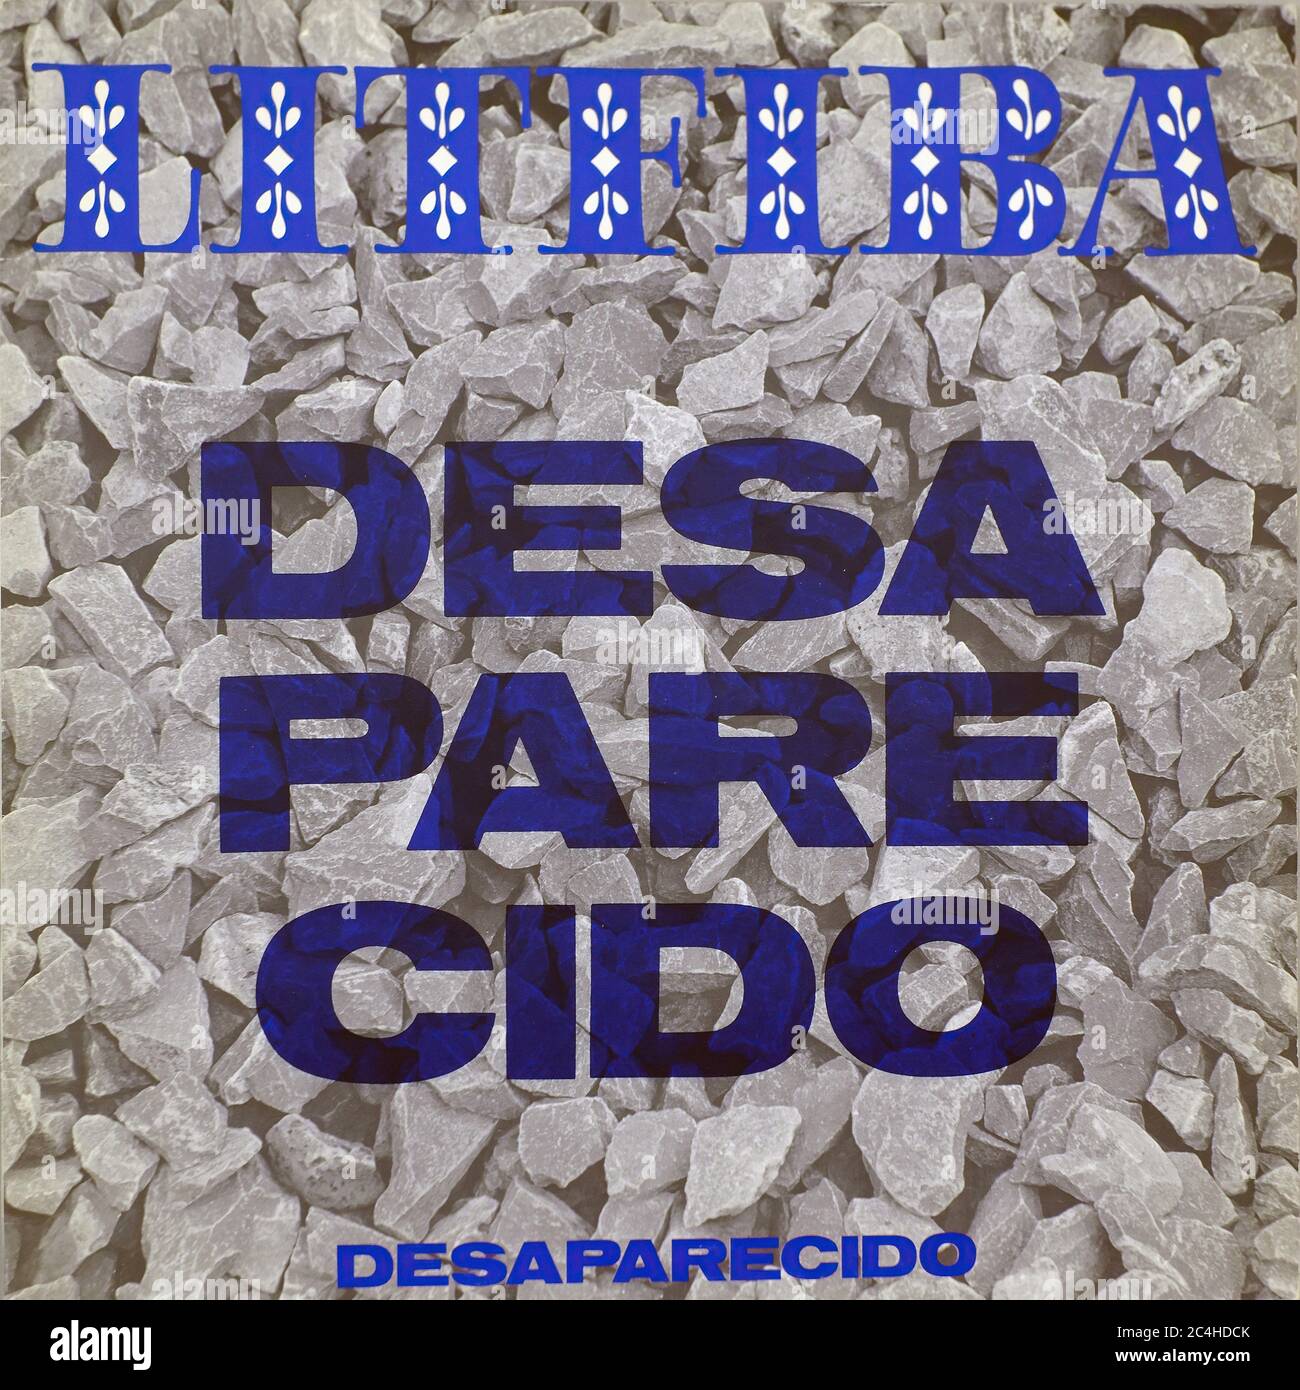 Litfiba Desaparecido Italian Issue 12'' Lp Album Vinyl - Vintage Cover  Stock Photo - Alamy